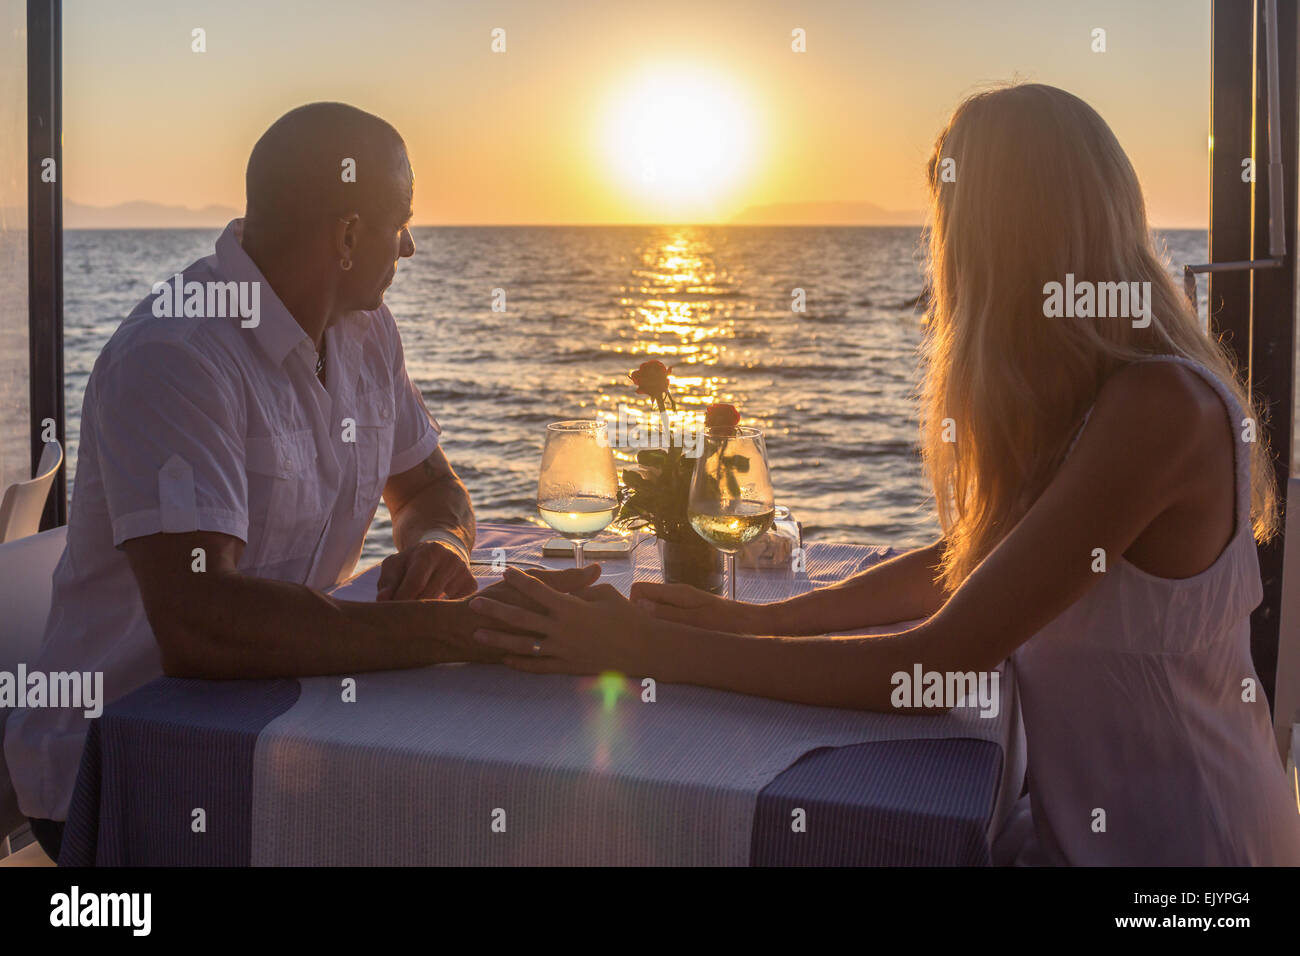 dating couple drinking silhouette sunset sun vacation summer sea restaurant Stock Photo